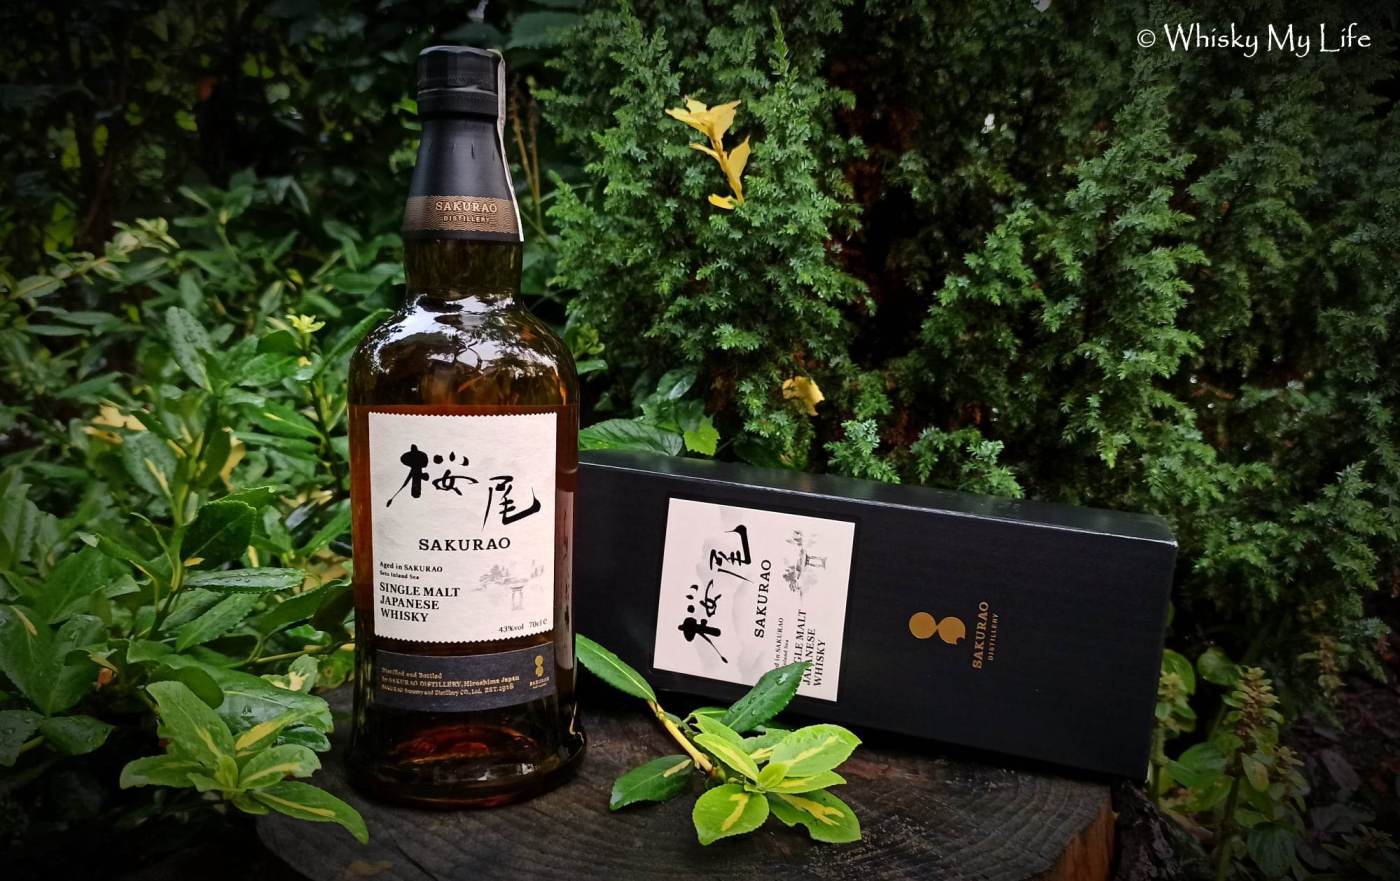 Sakurao Single Malt Japanese – Whisky Life 43% Whisky vol. – My